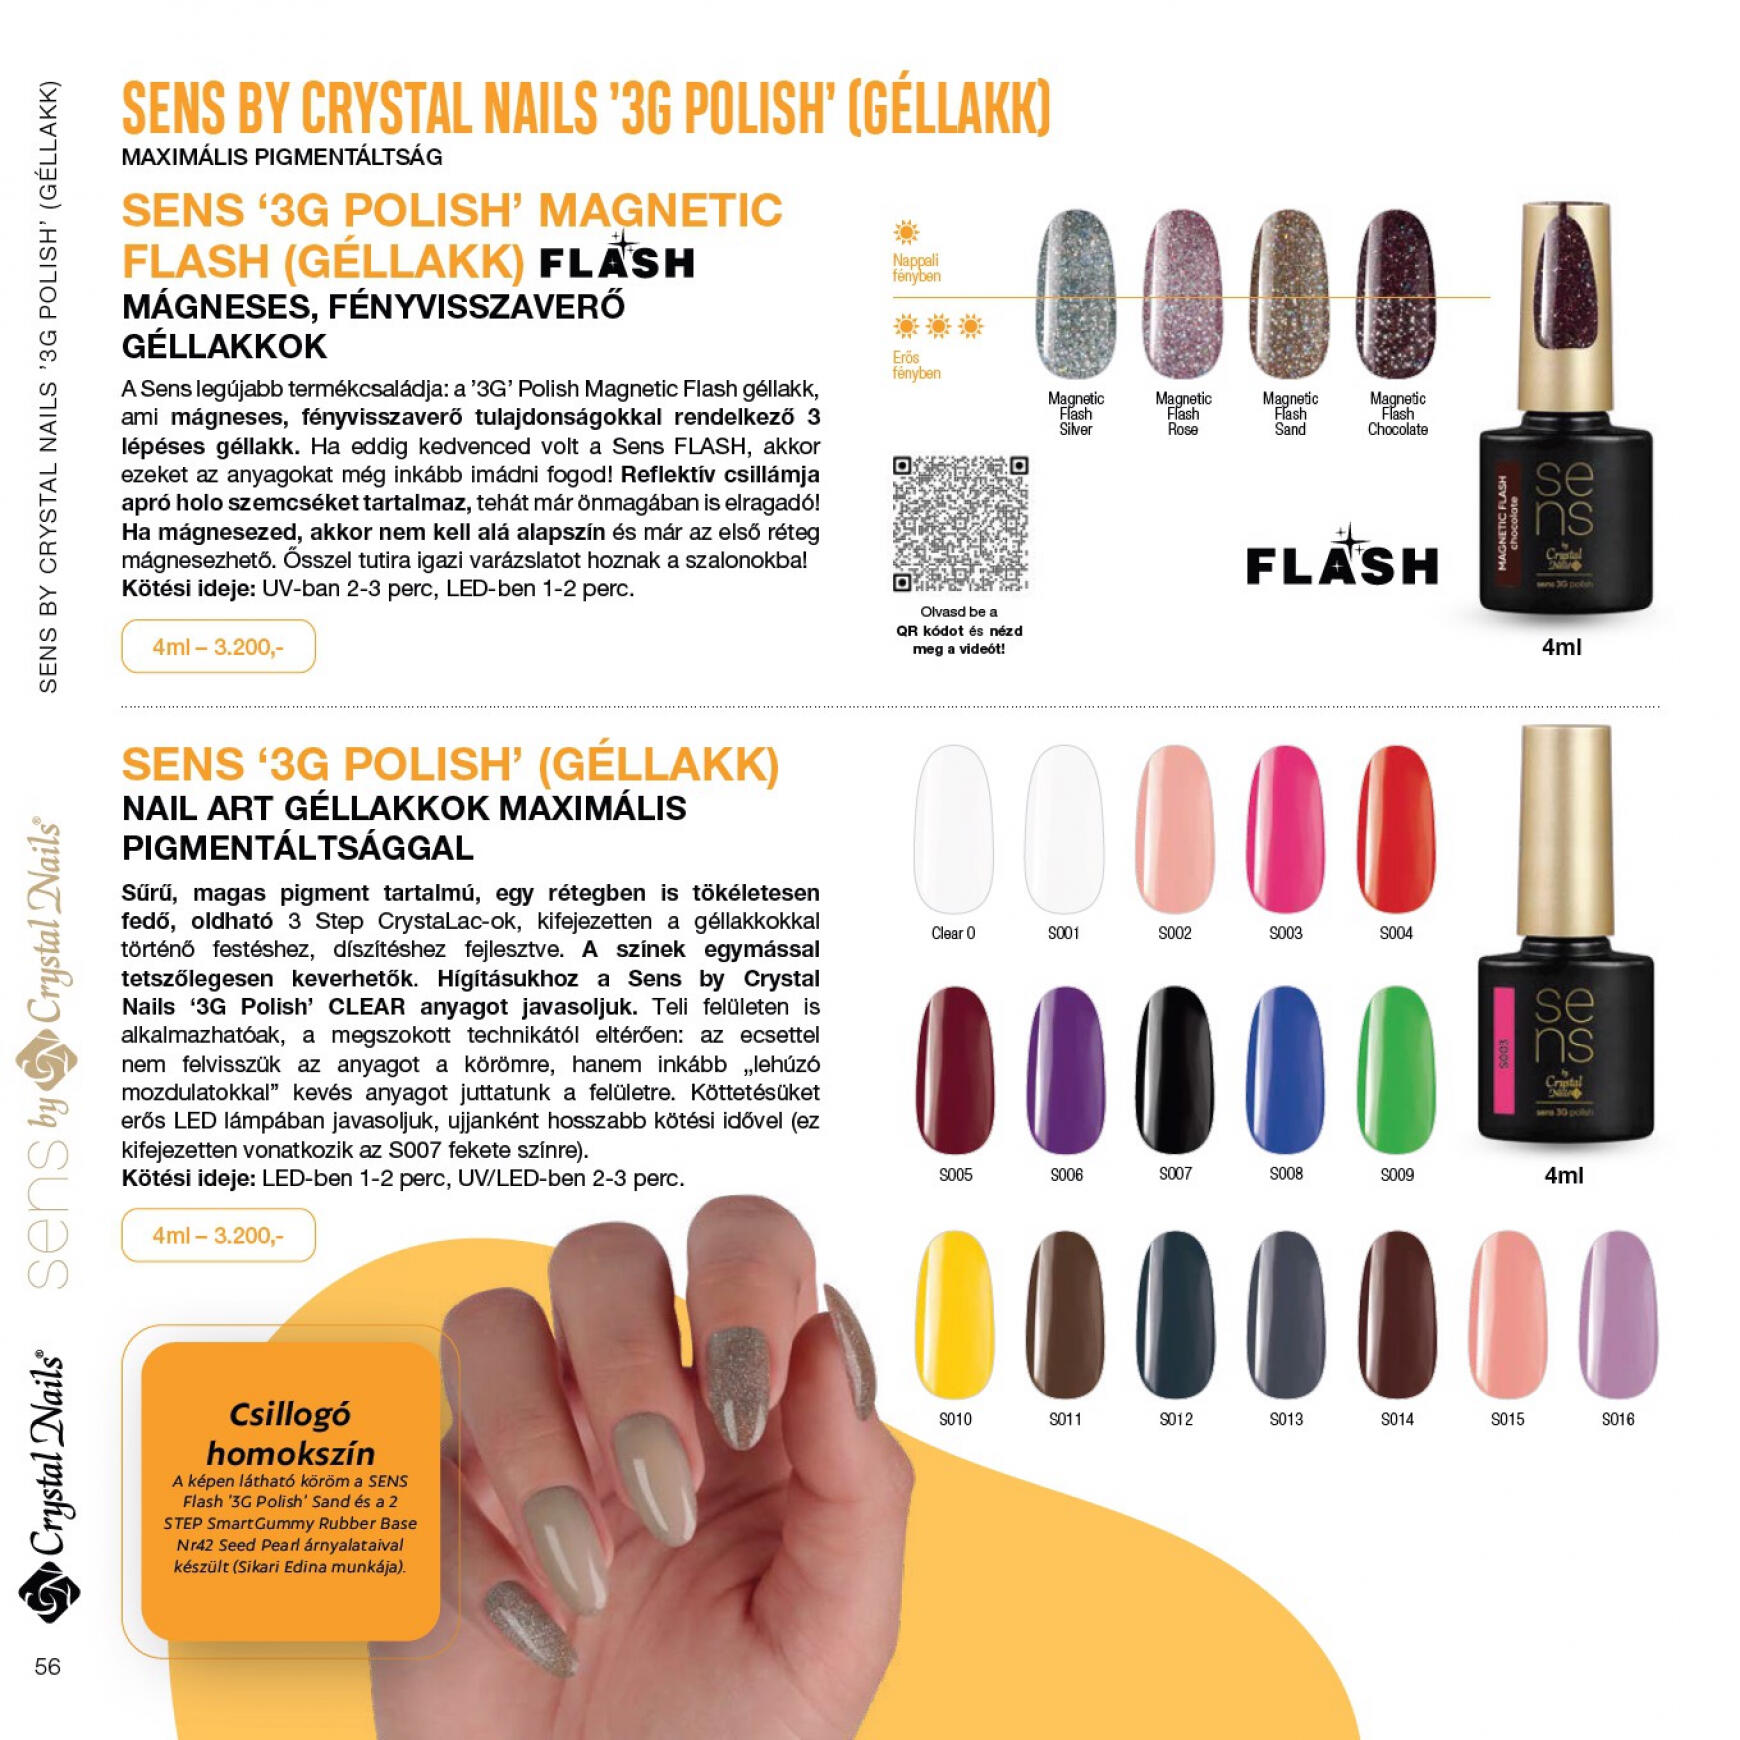 crystal-nails - Aktuális újság Crystal Nails 05.01. - 12.31. - page: 56